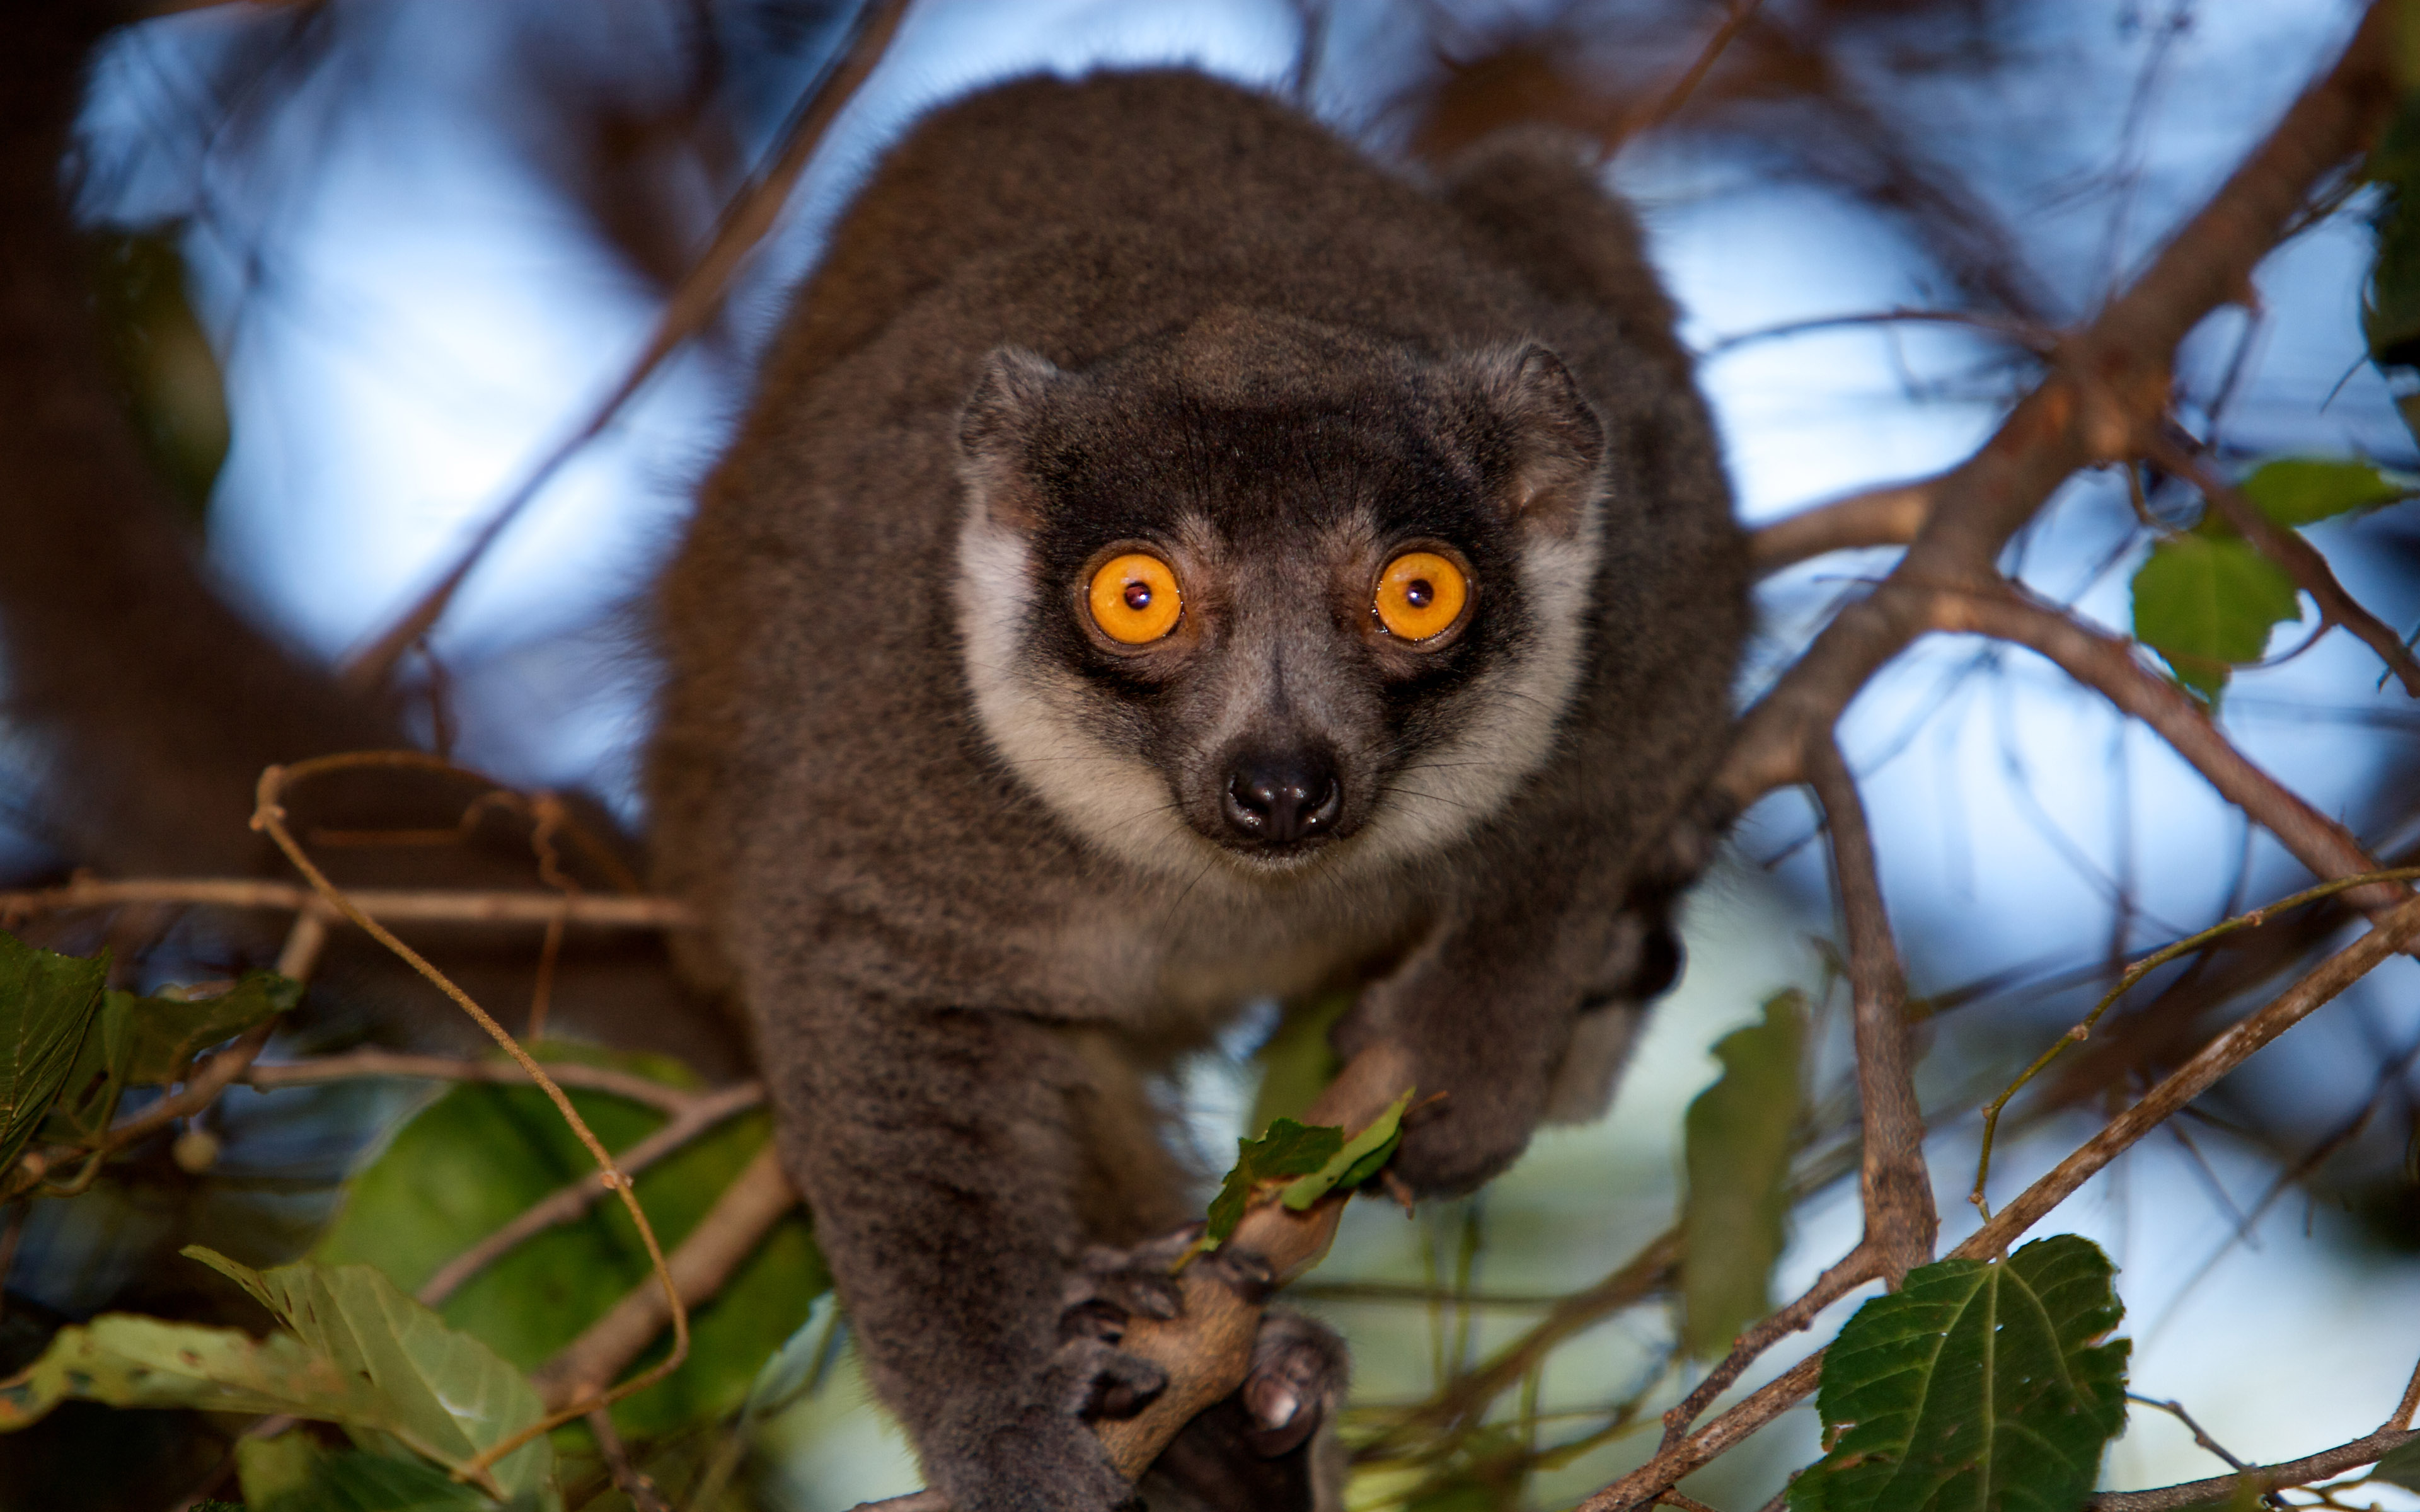 Lemur From Madagascar Wallpaper Hd : Wallpapers13.com